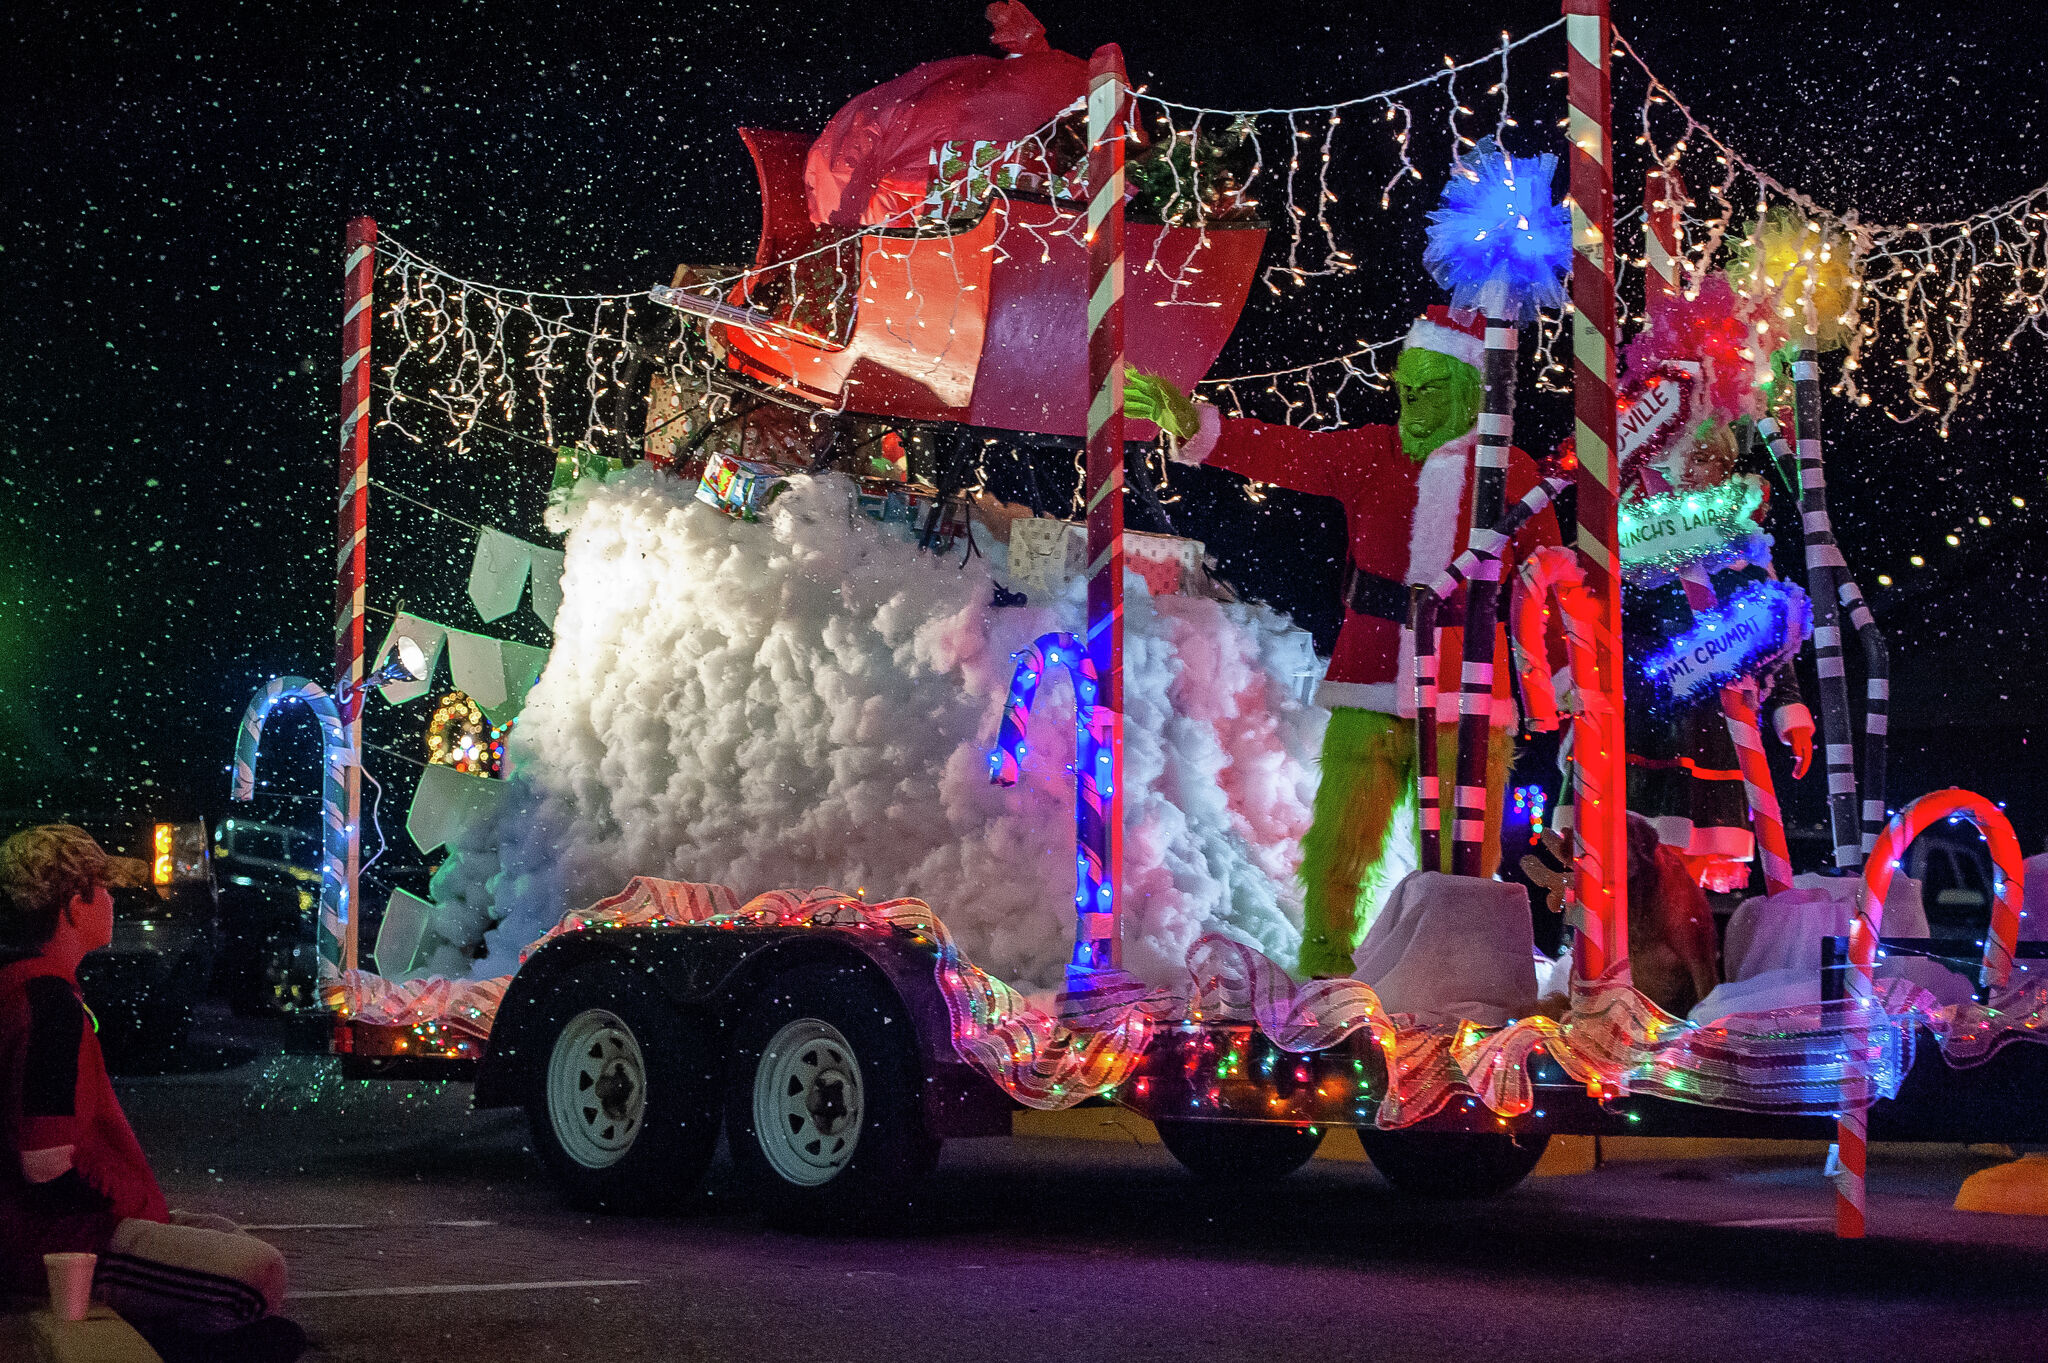 PHOTOS Sanford Shines during parade and Christmas tree displays